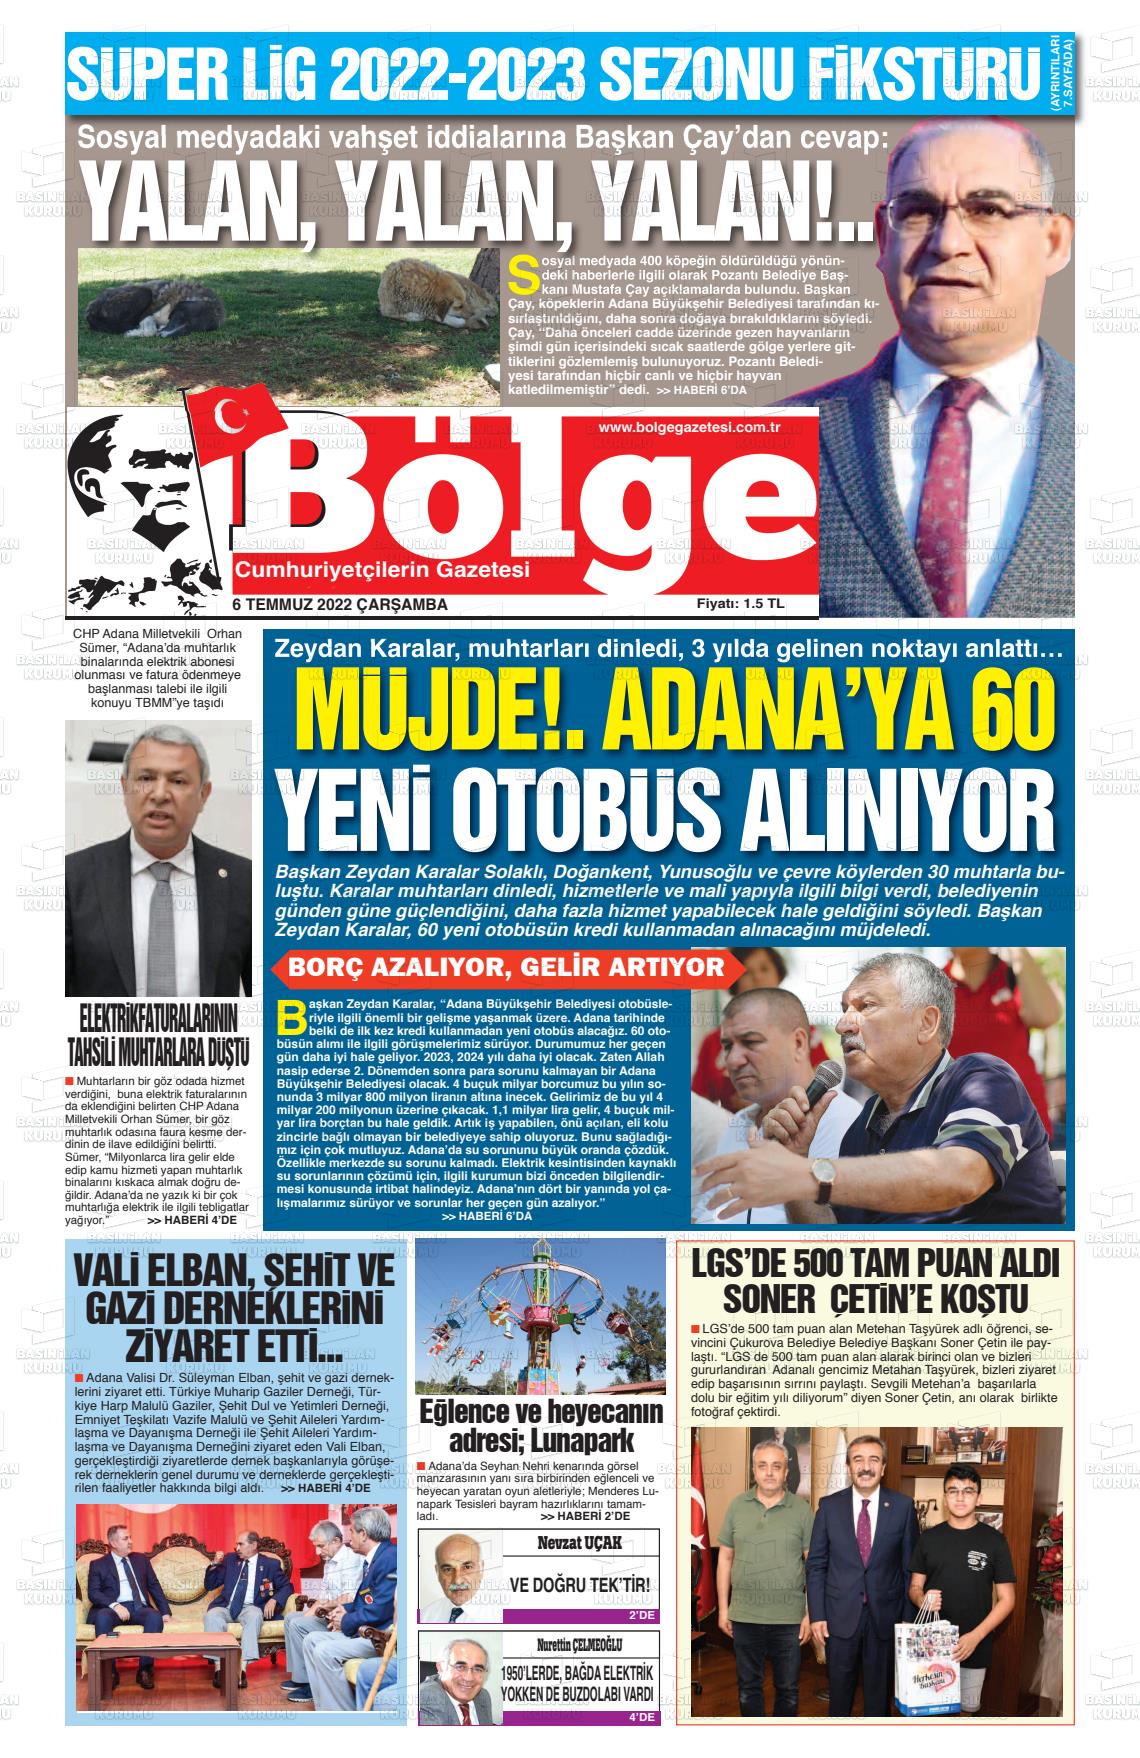 06 Temmuz 2022 Adana Bölge Gazete Manşeti